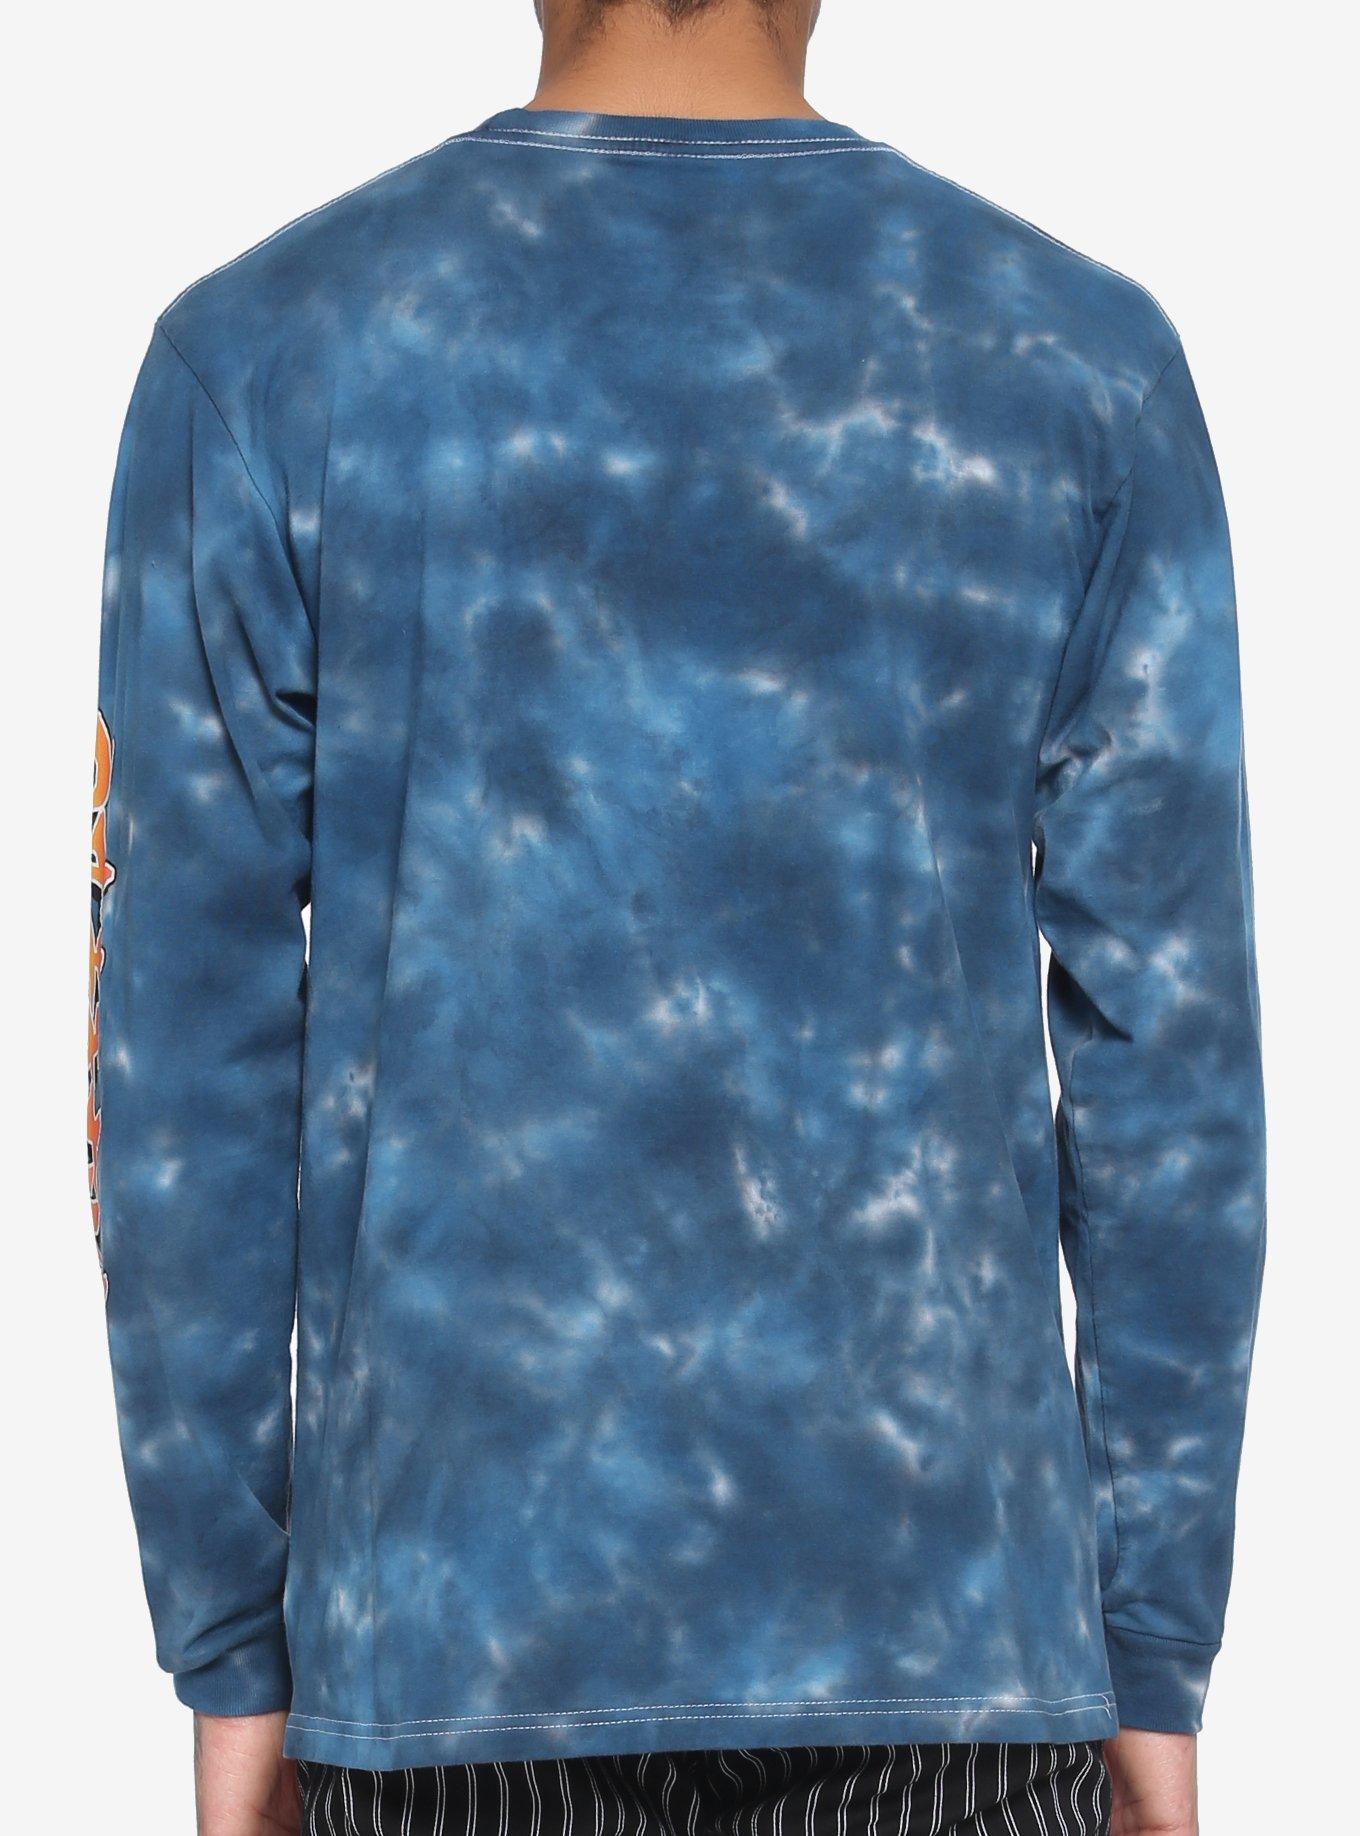 Naruto Shippuden Forms Blue Wash Long-Sleeve T-Shirt, BLUE, alternate